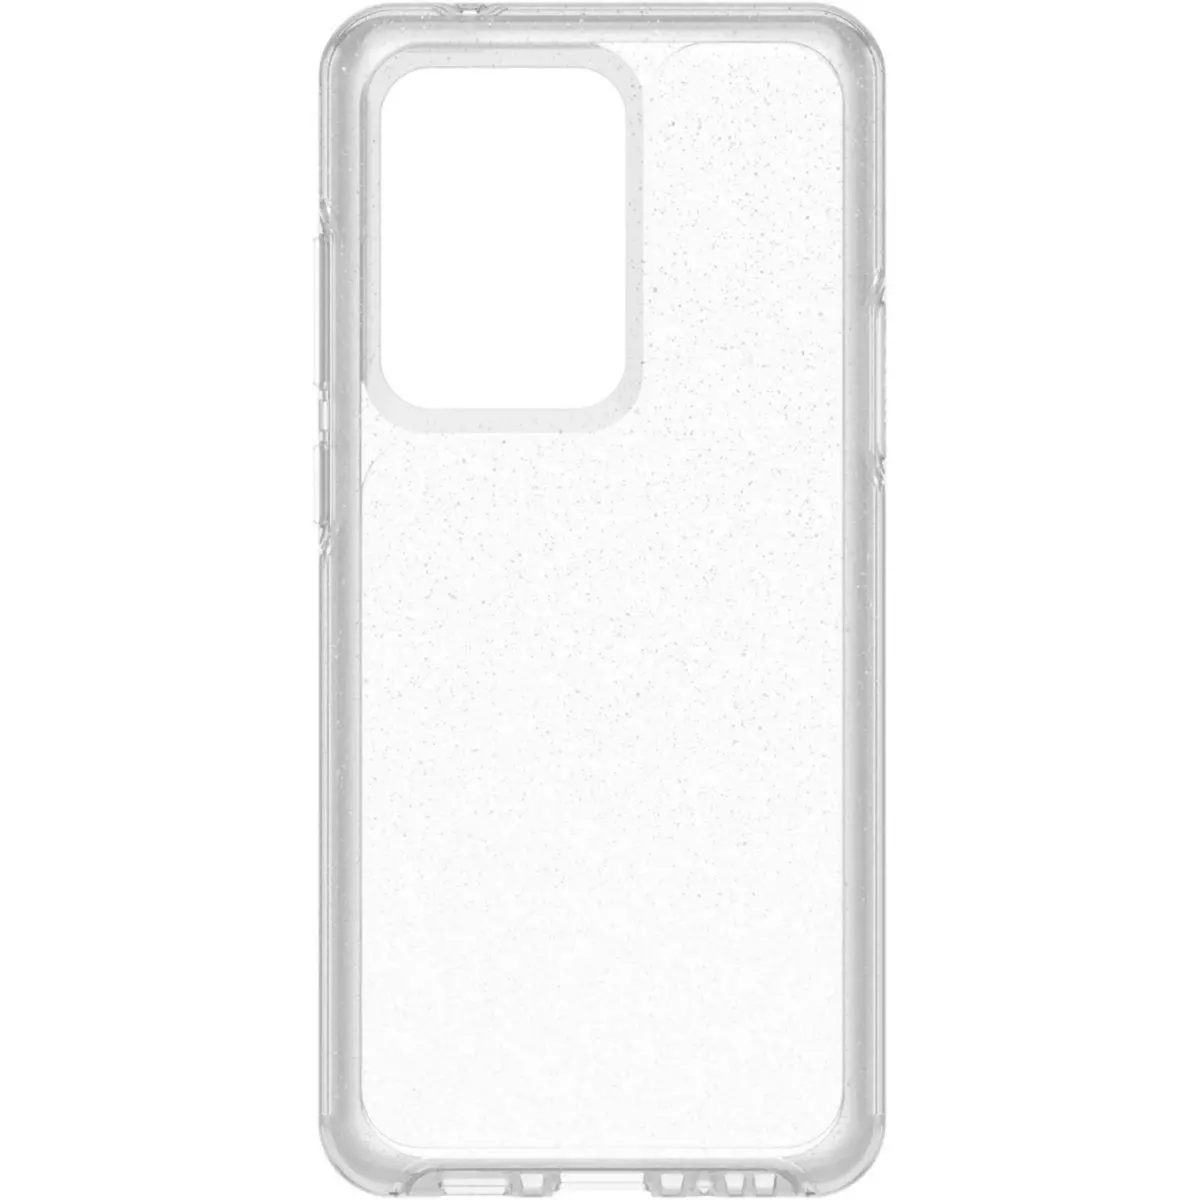 Otterbox Coque Samsung S20 Ultra Stardust transparent